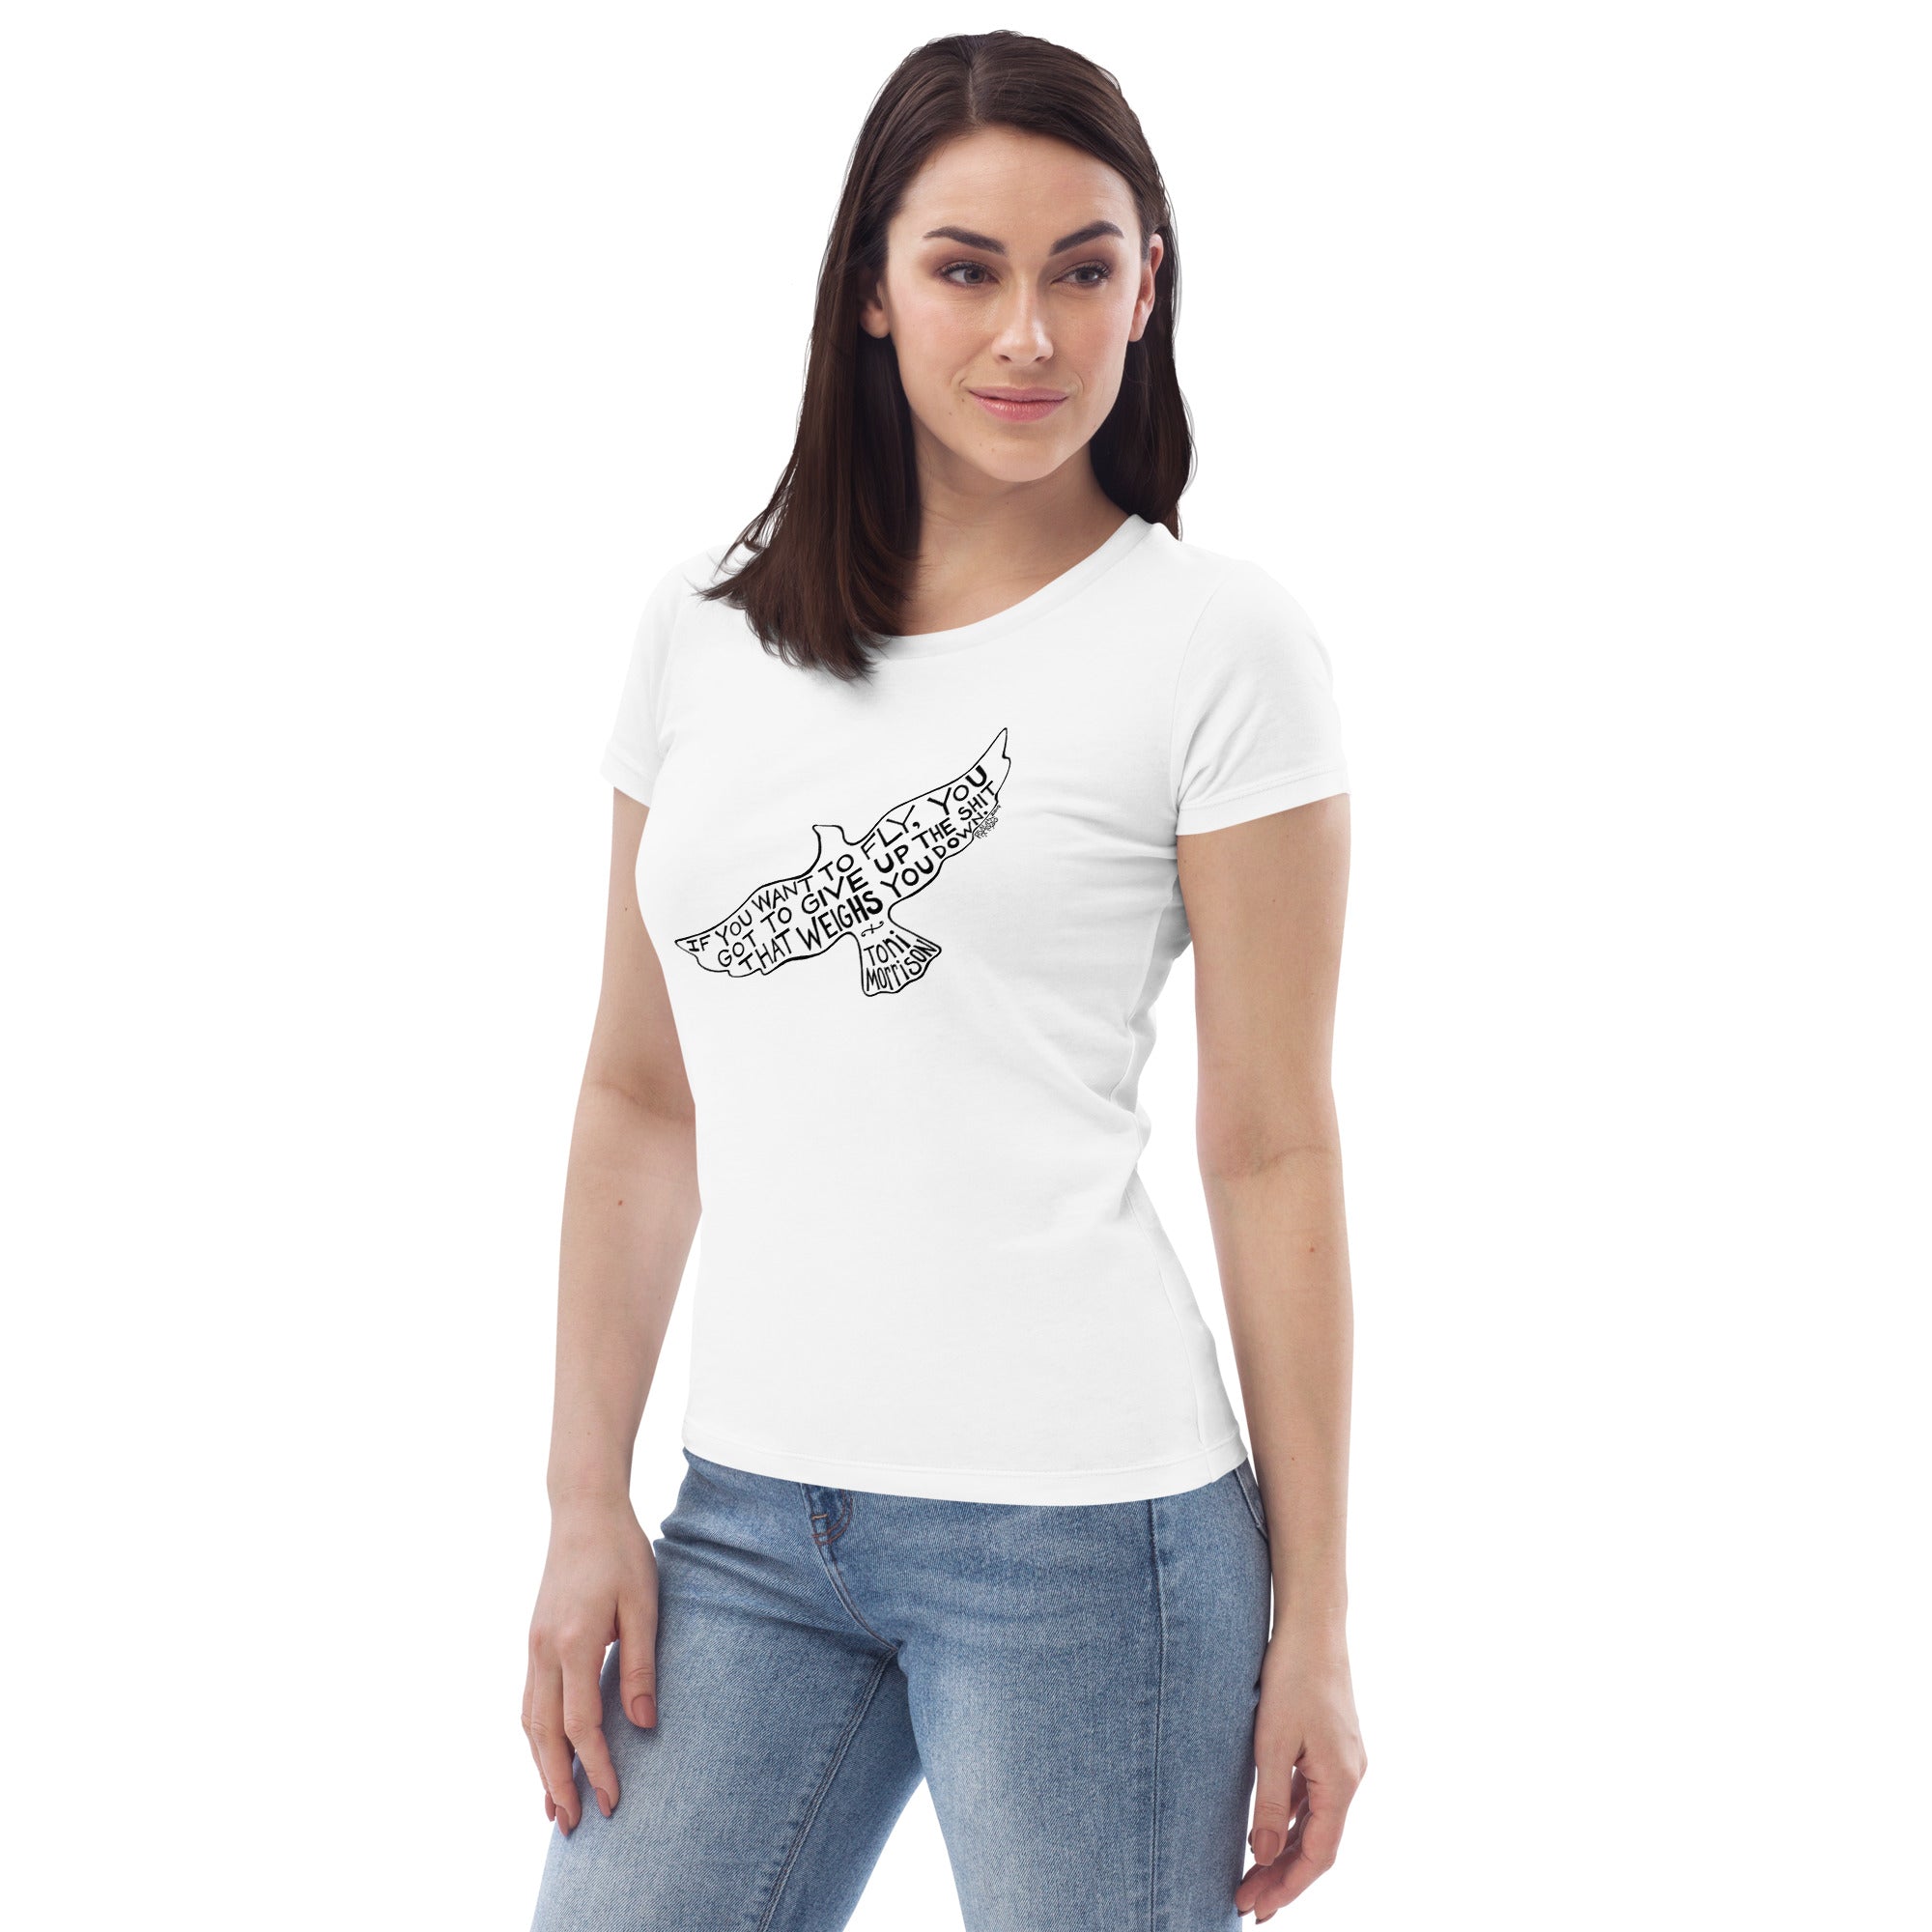 Toni Morrison Organic Cotton Scoop Neck T-Shirt In White By Artist Rick Frausto